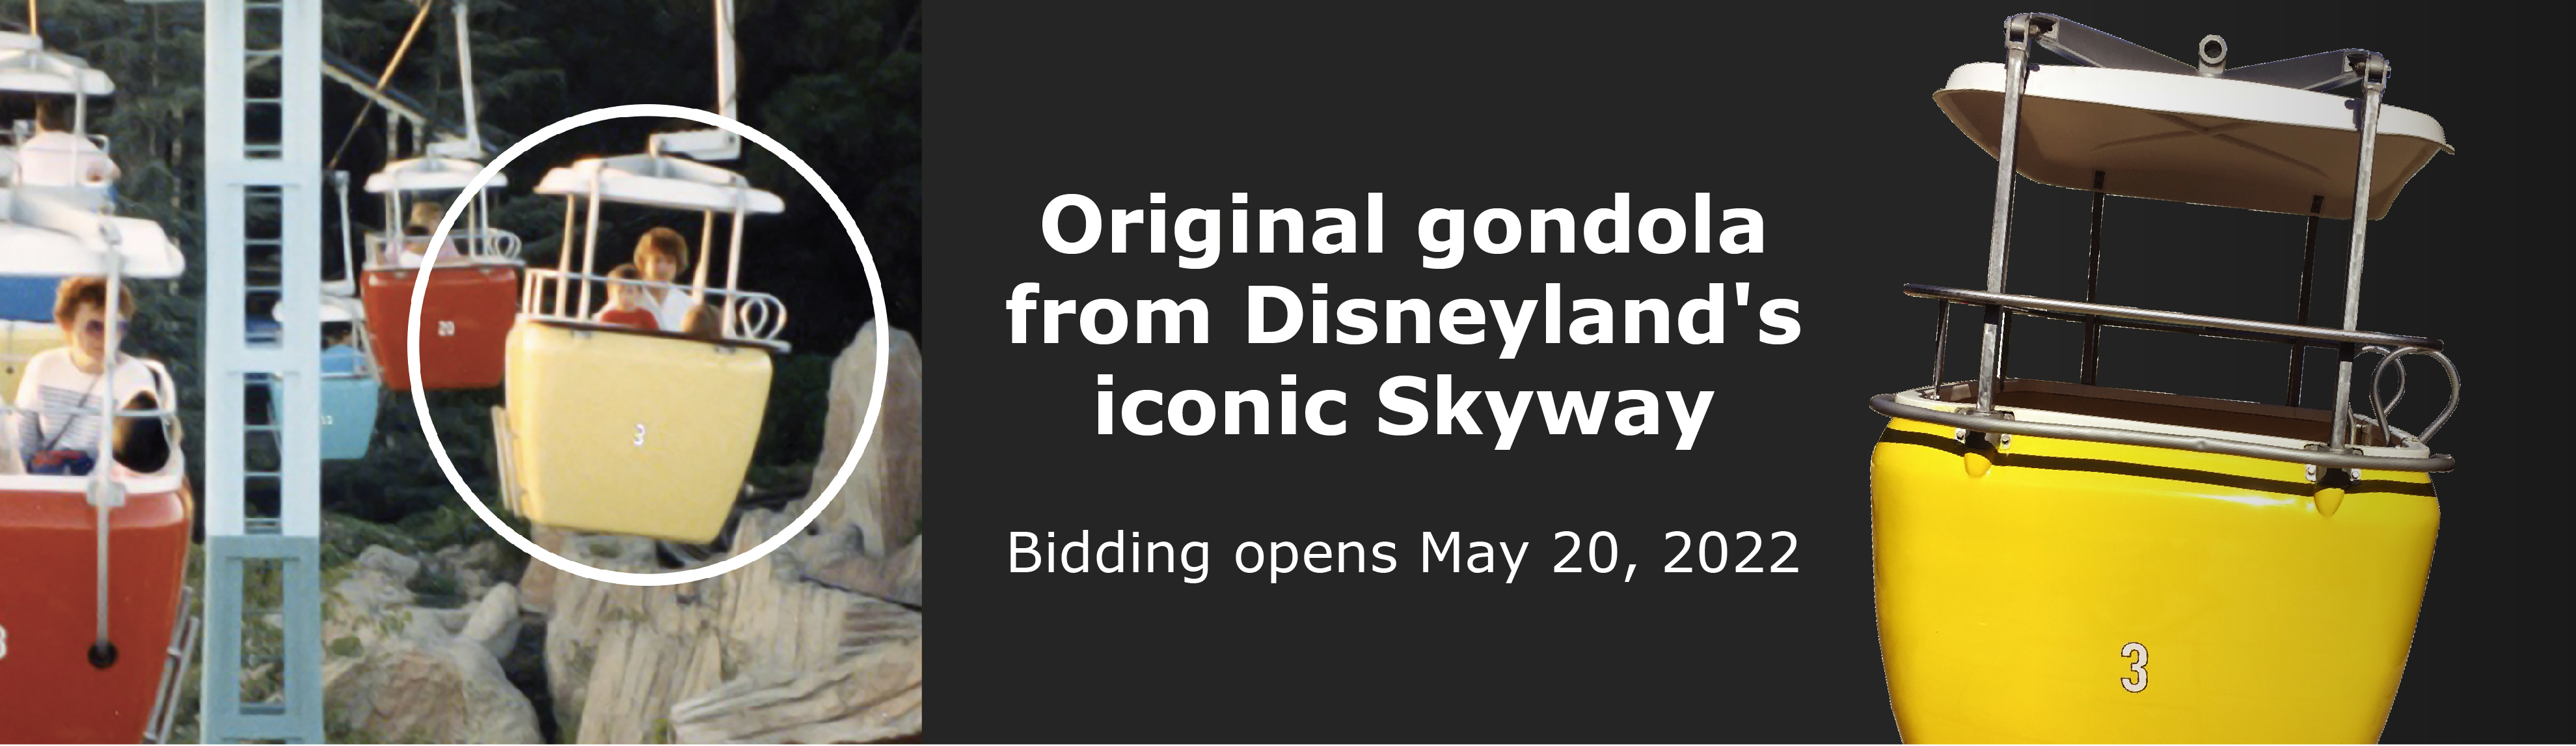 Original gondola from Disneyland's iconic Skyway. Bidding opens May 20, 2022!